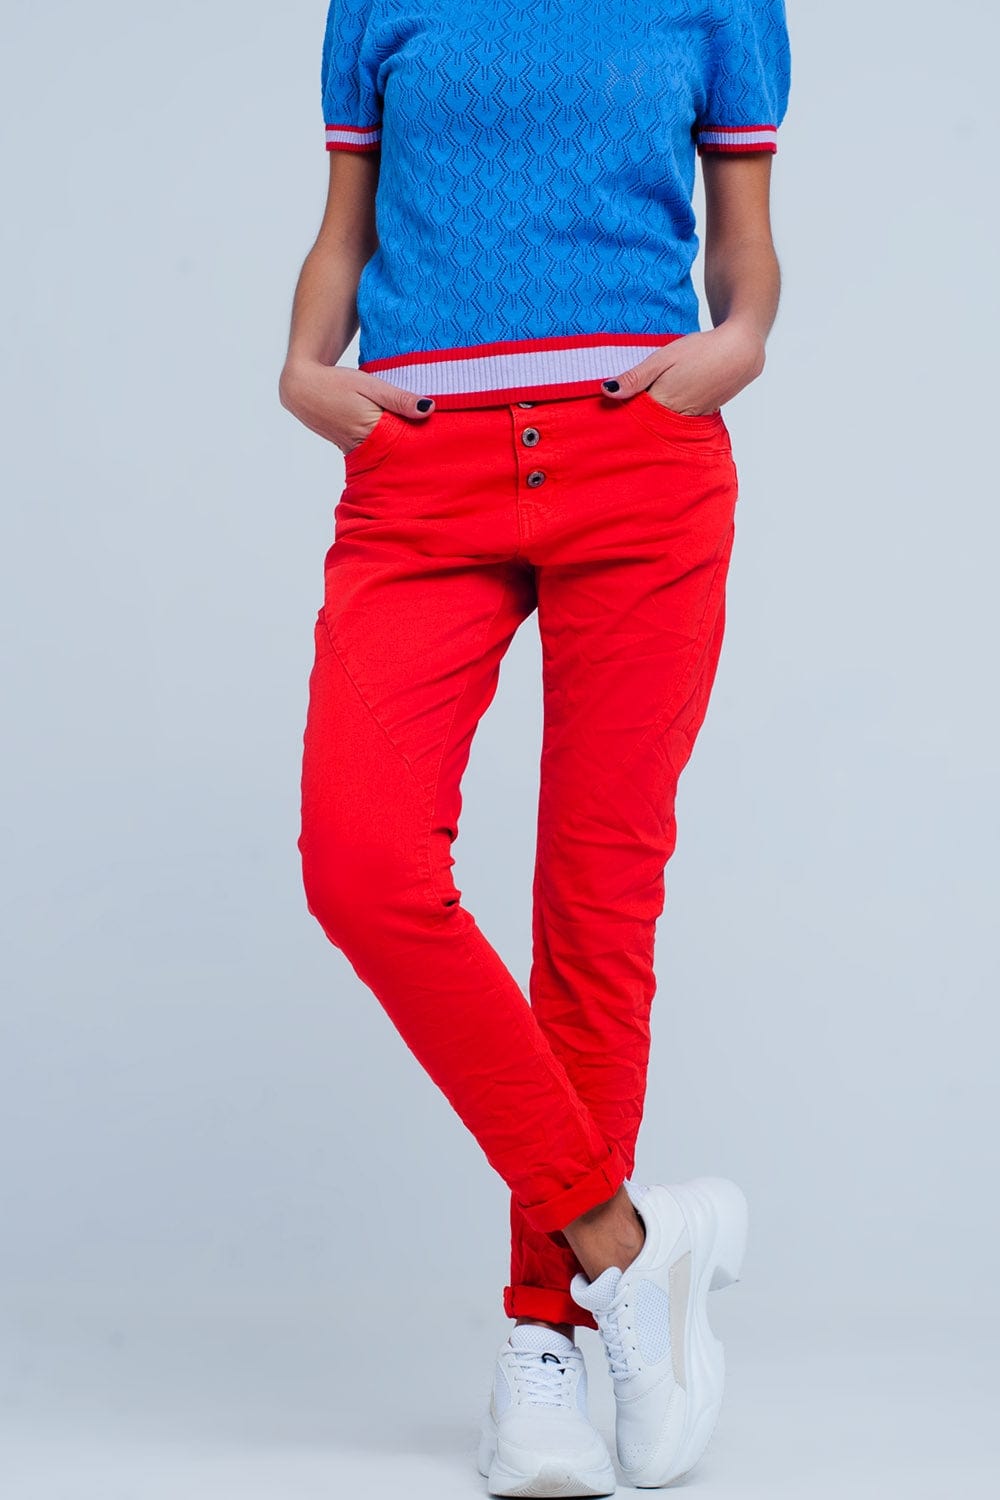 Q2 Women's Pants & Trousers Red Low Rise Boyfriend Jeans